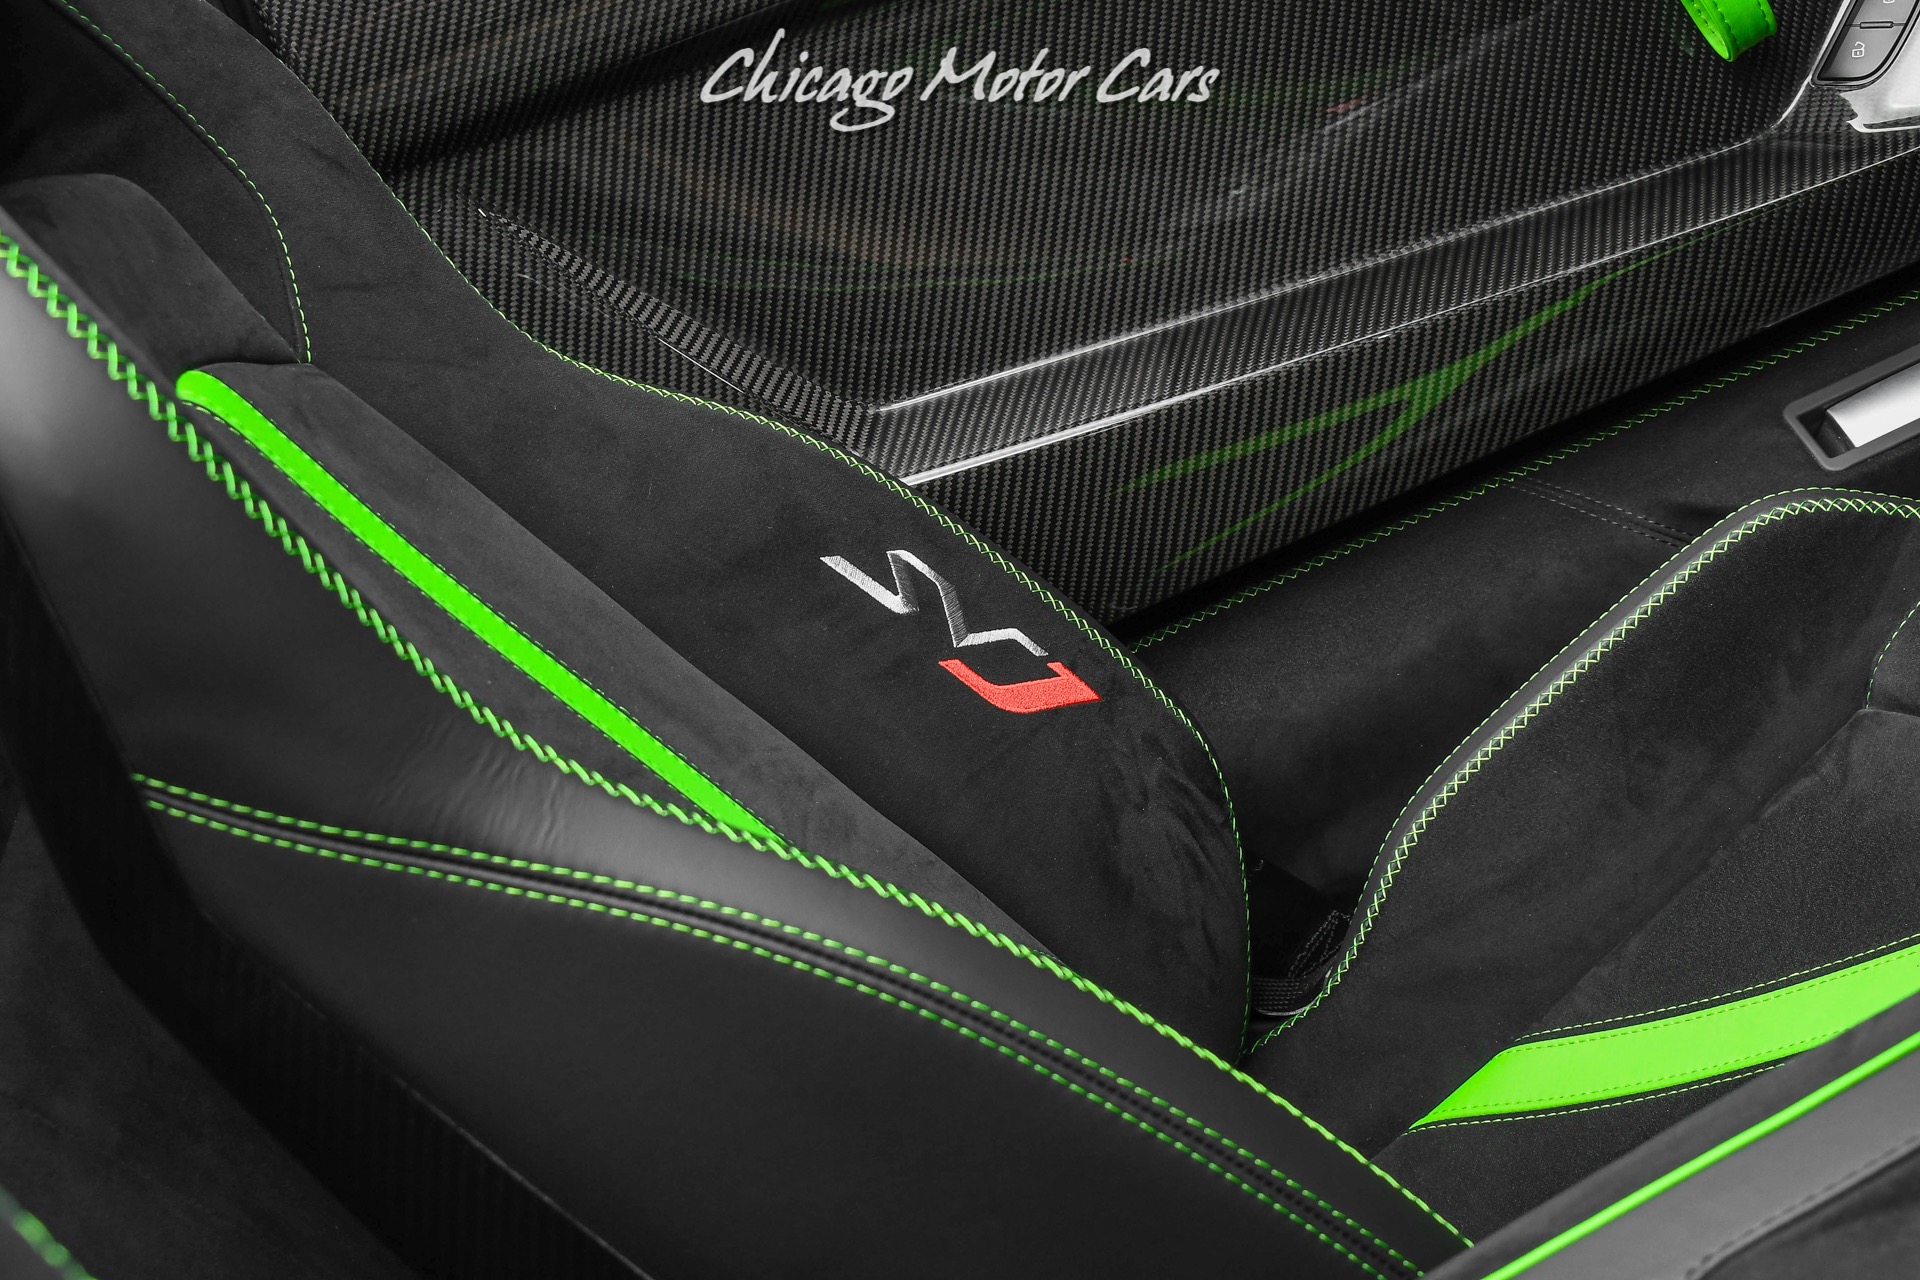 Used-2021-Lamborghini-Aventador-SVJ-LP770-4-Roadster-Verde-Mantis-Pearl-Effect-ONLY-104-Miles-RARE-LOADED